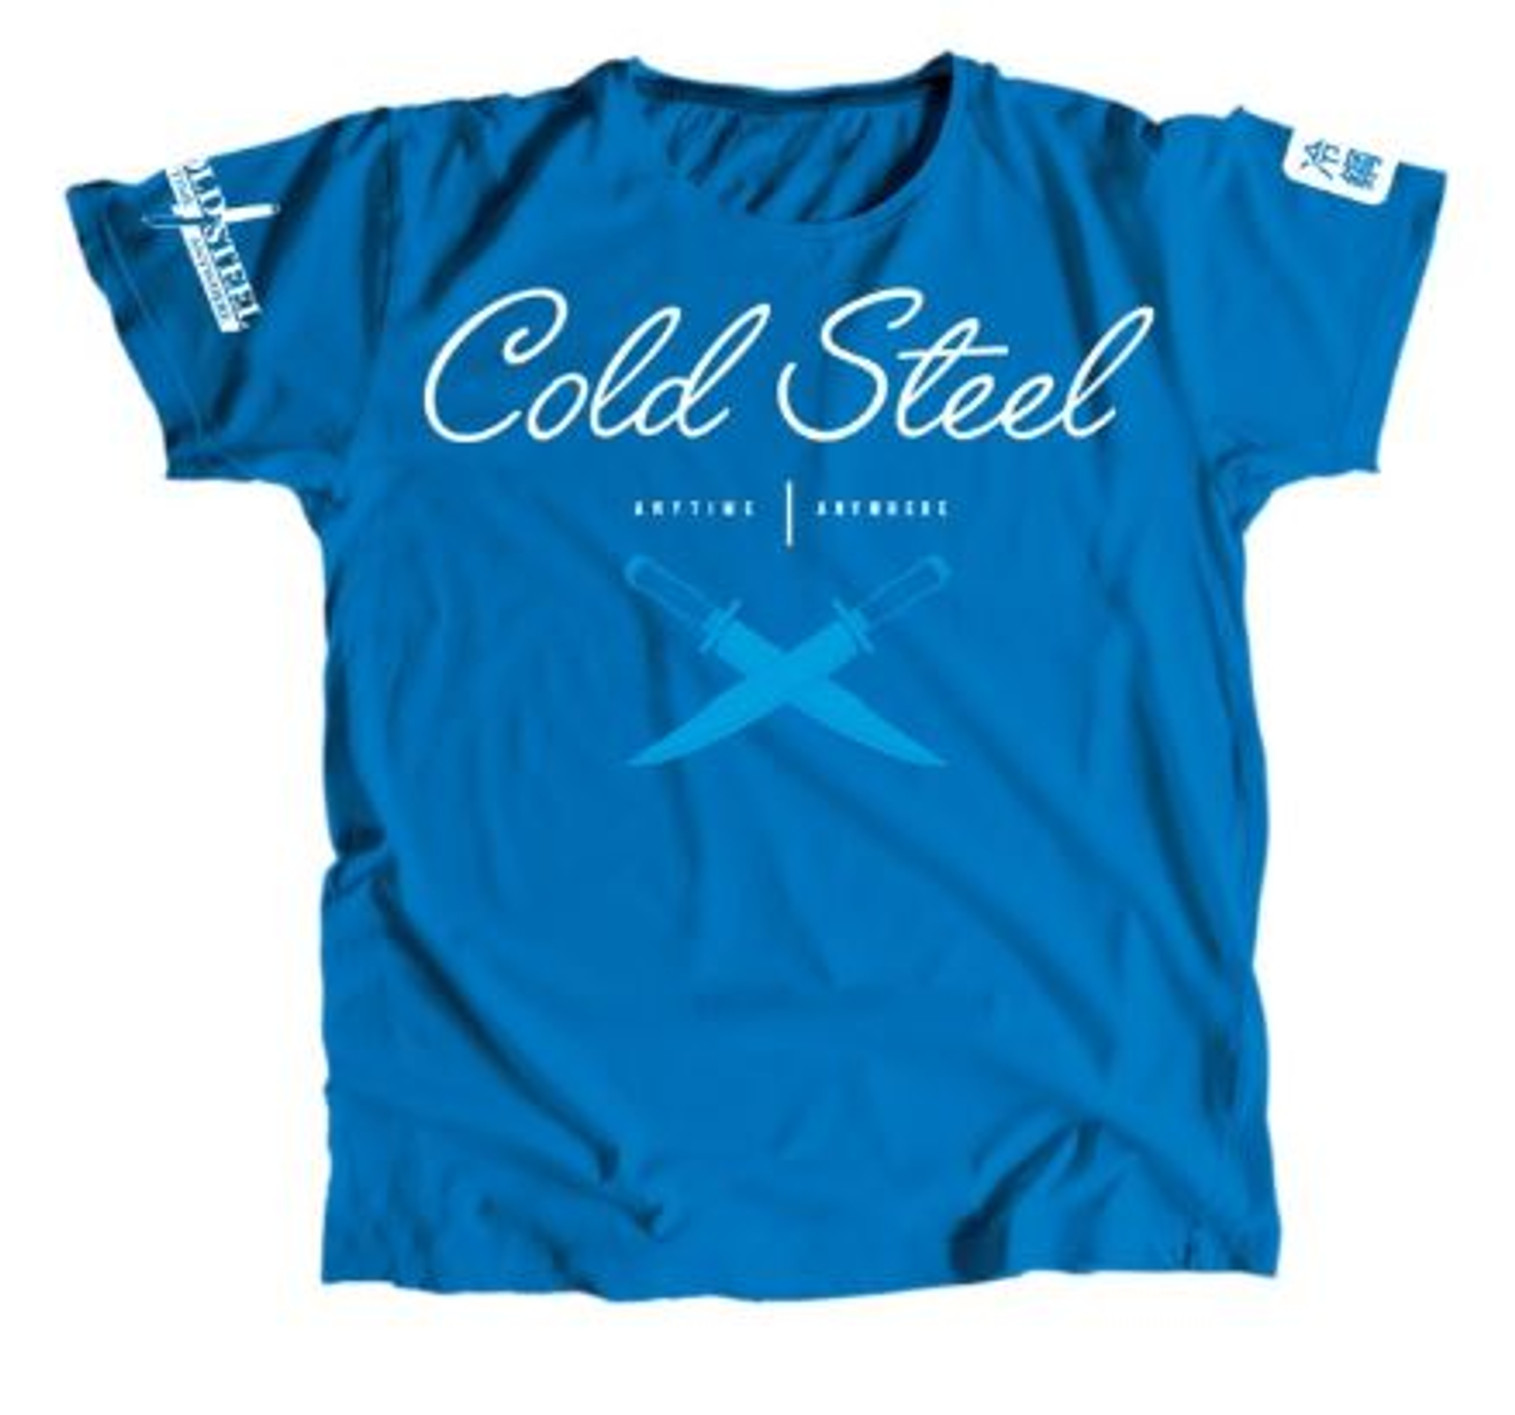 Cold Steel Women's Cursive Cross Guard T-Shirt, Blue